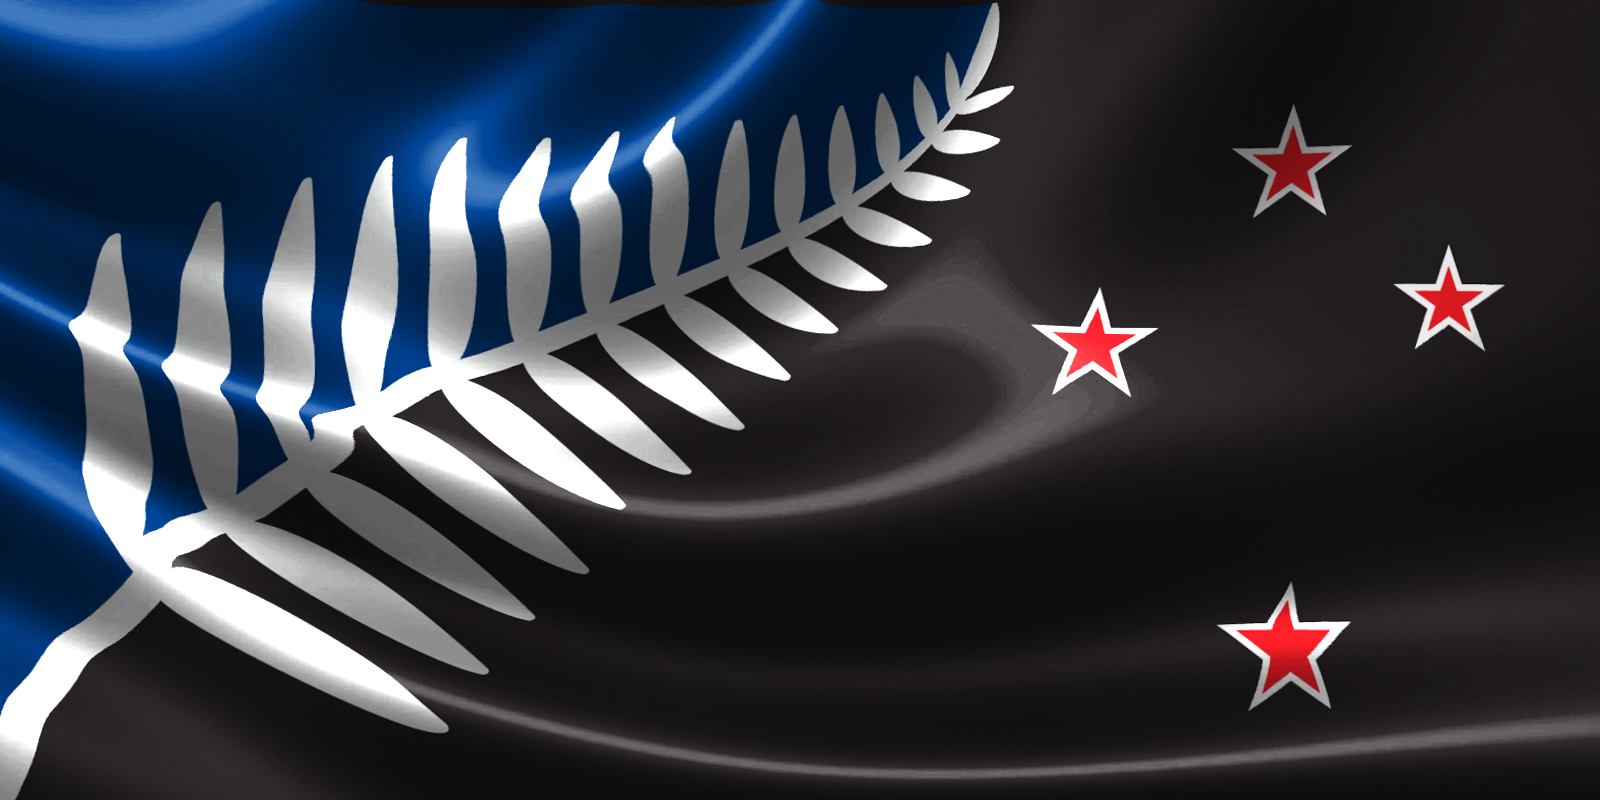 Download New Zealand Flag [1600x800] 73 New Zealand All Blacks